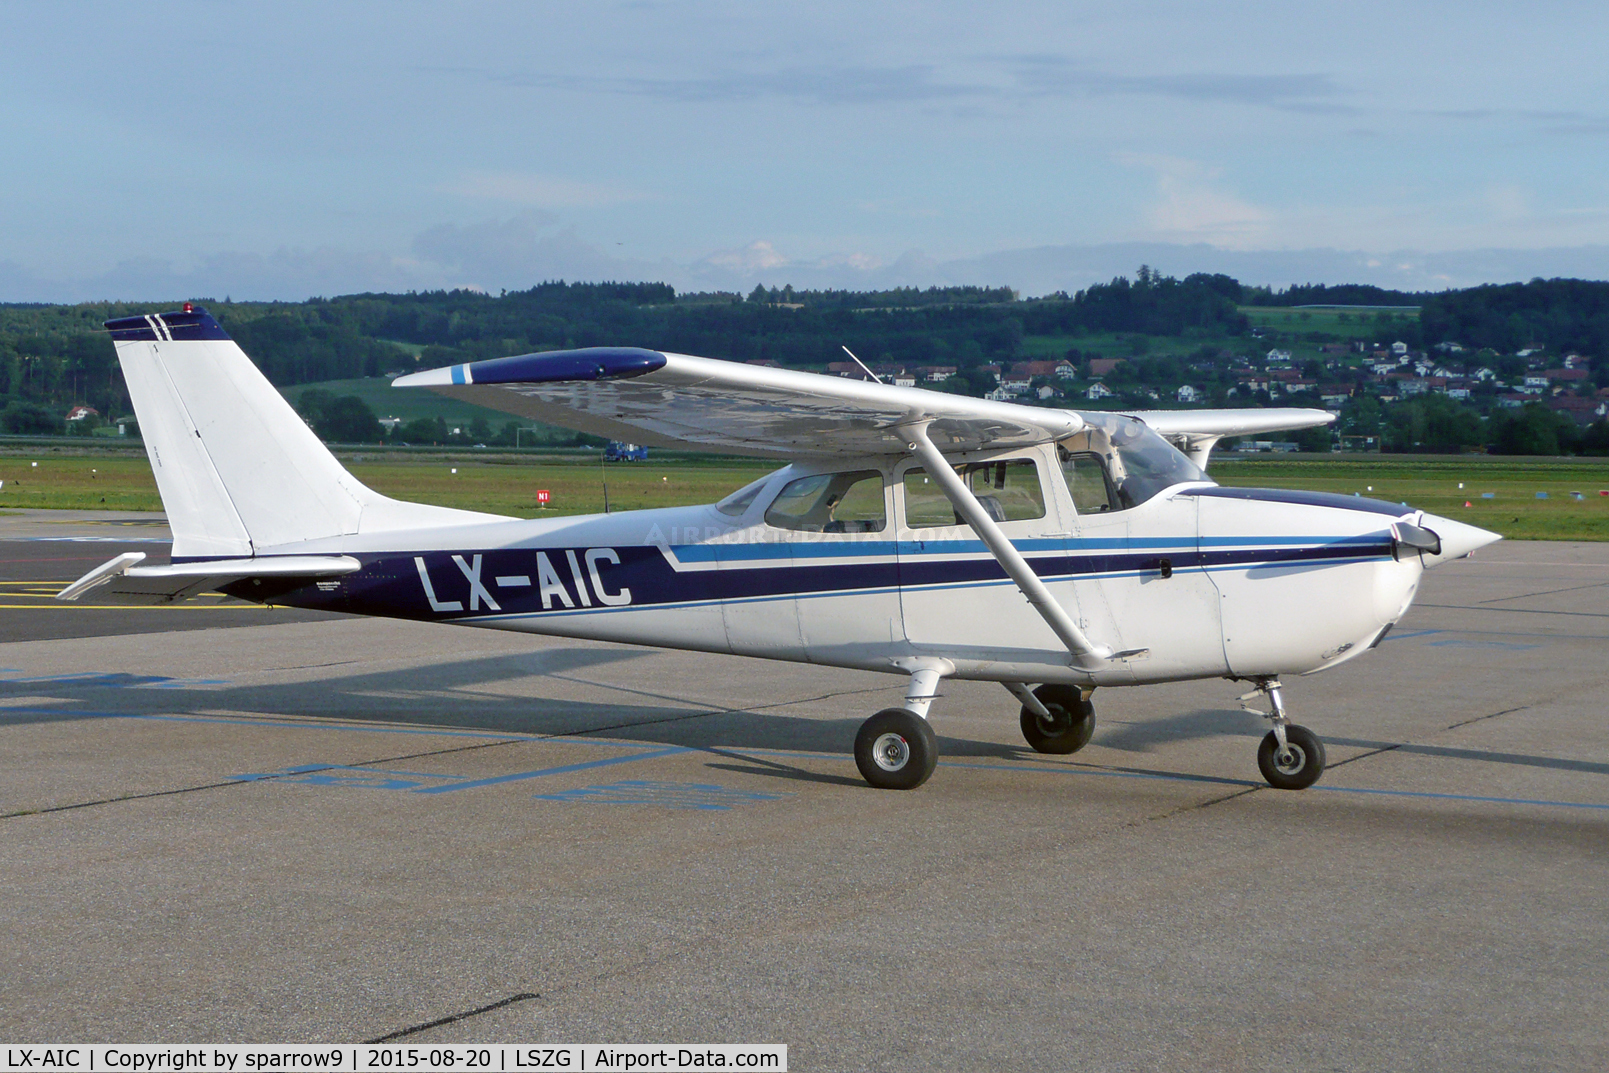 LX-AIC, 1972 Reims F172L Skyhawk C/N F17200852, at Grenchen airport